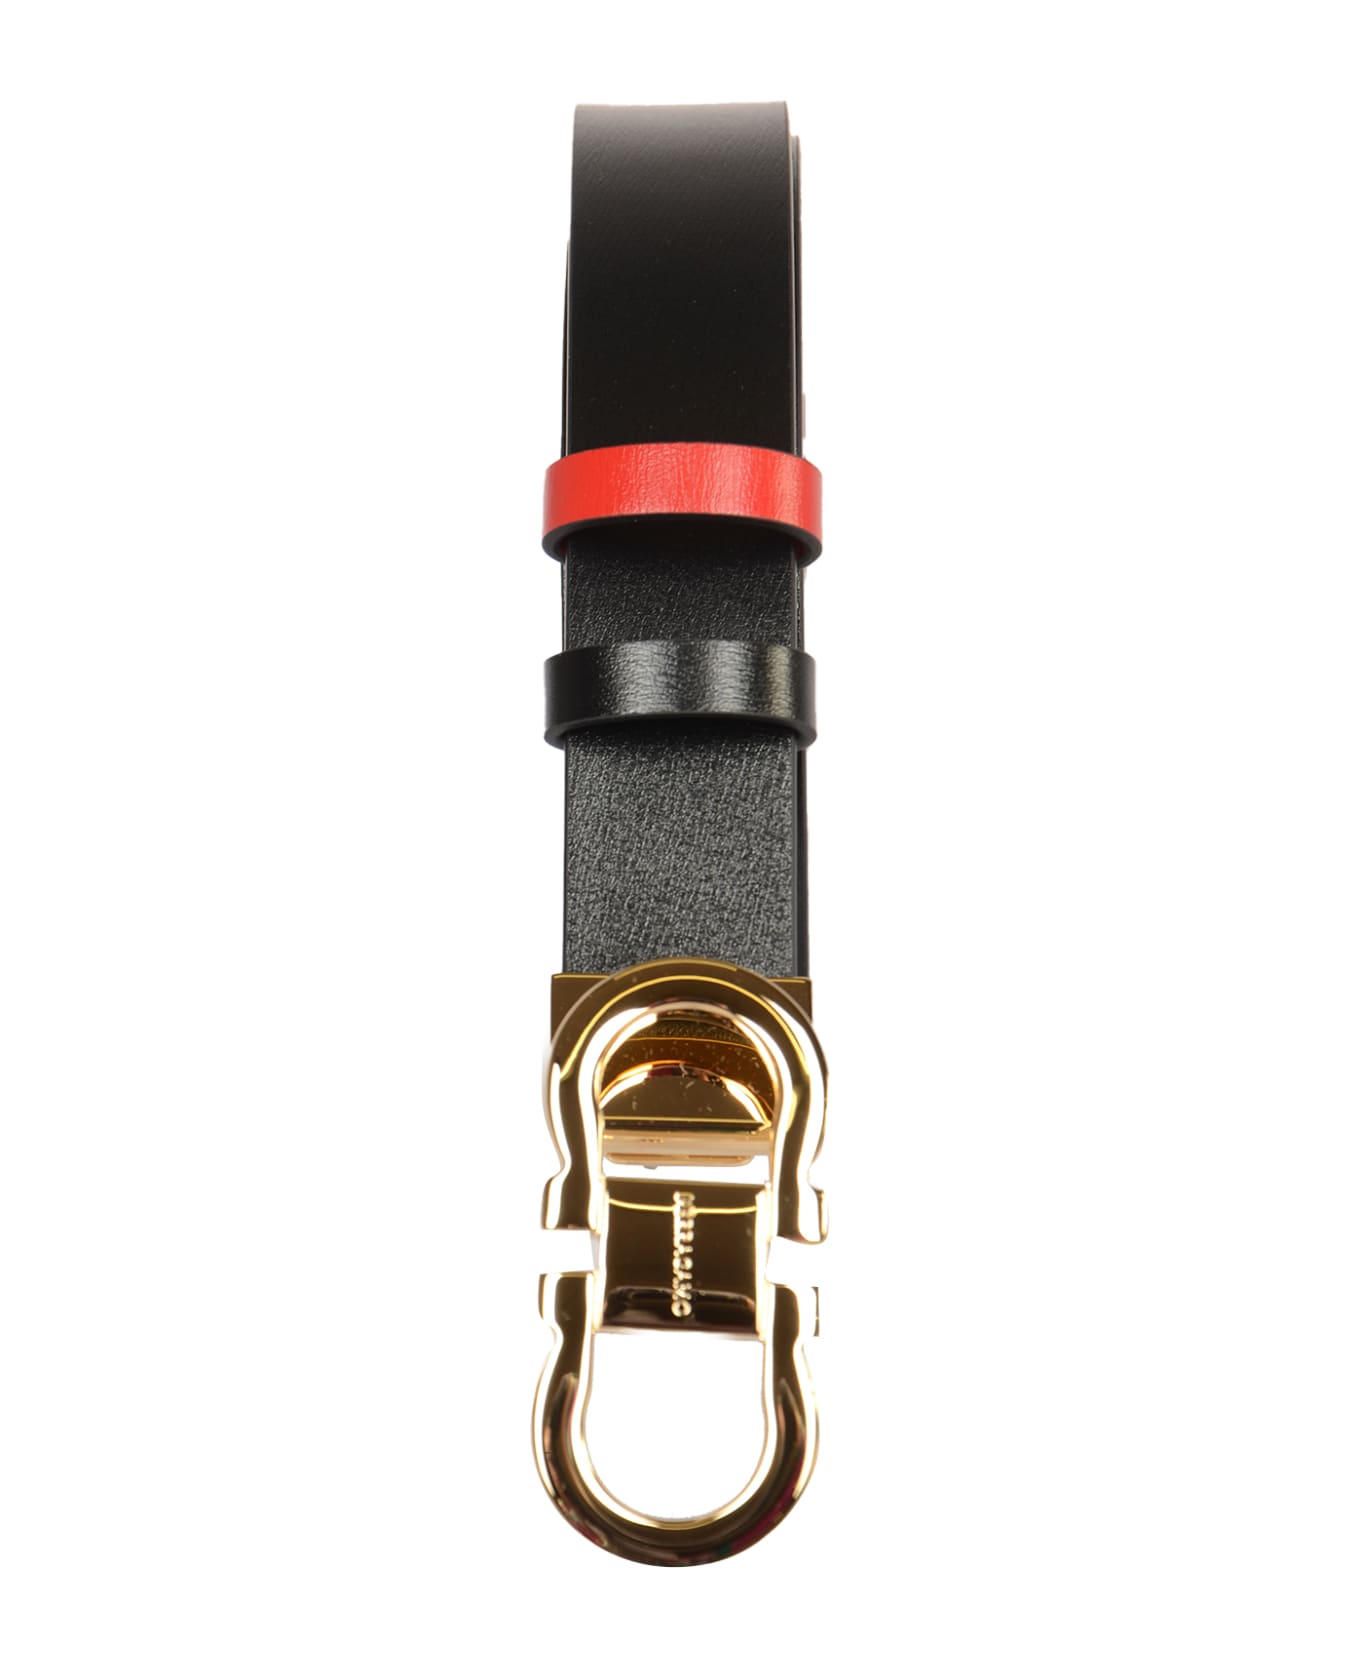 Ferragamo Double Gancini Belt - Black/Flame Red